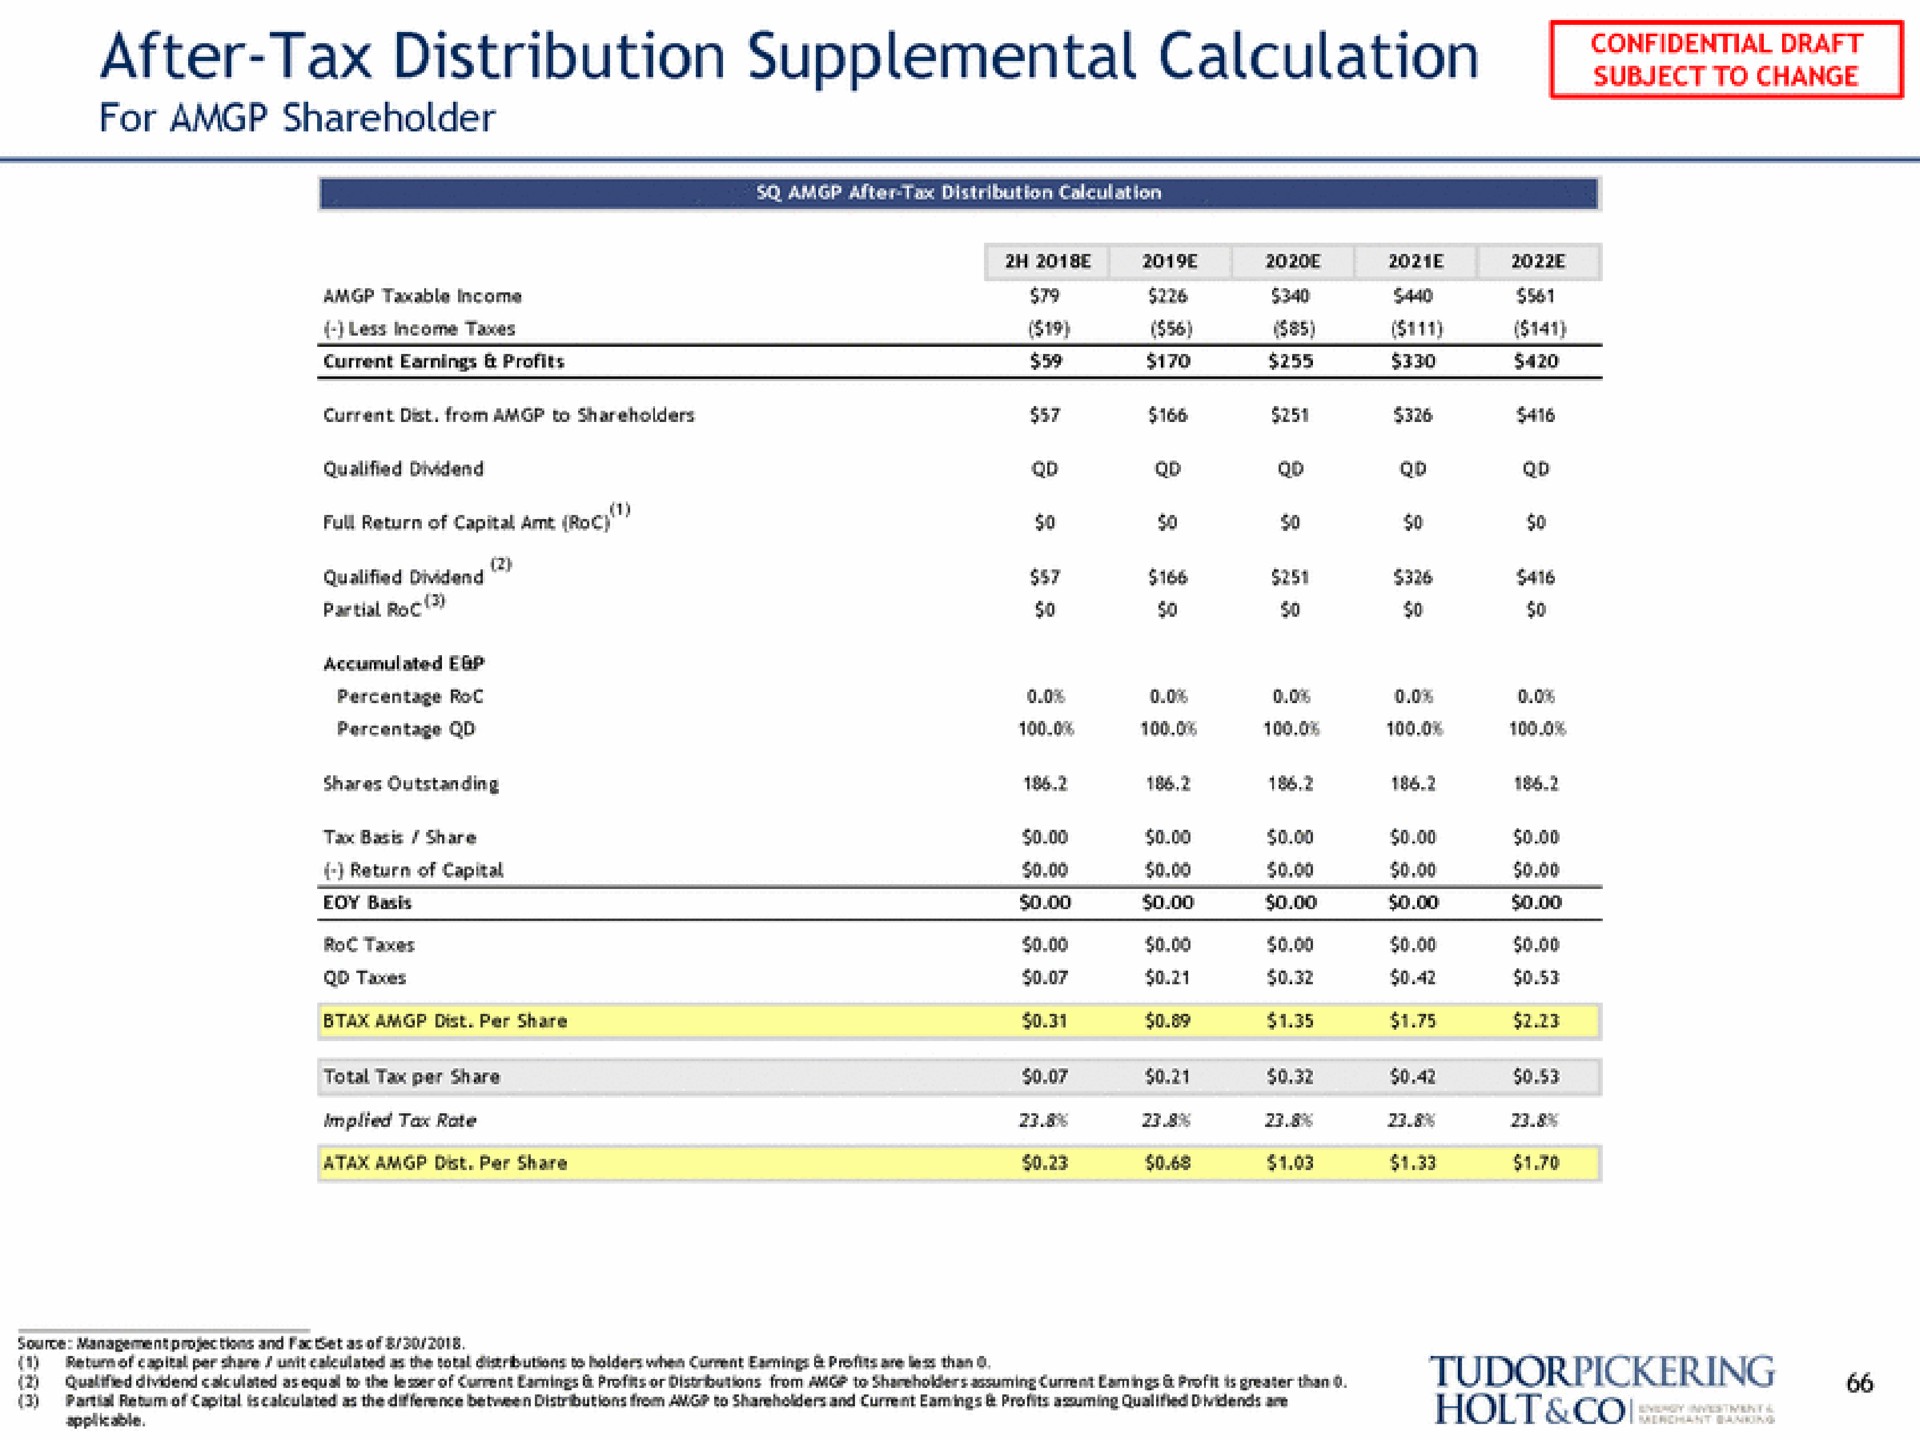 after tax distribution supplemental calculation | Tudor, Pickering, Holt & Co